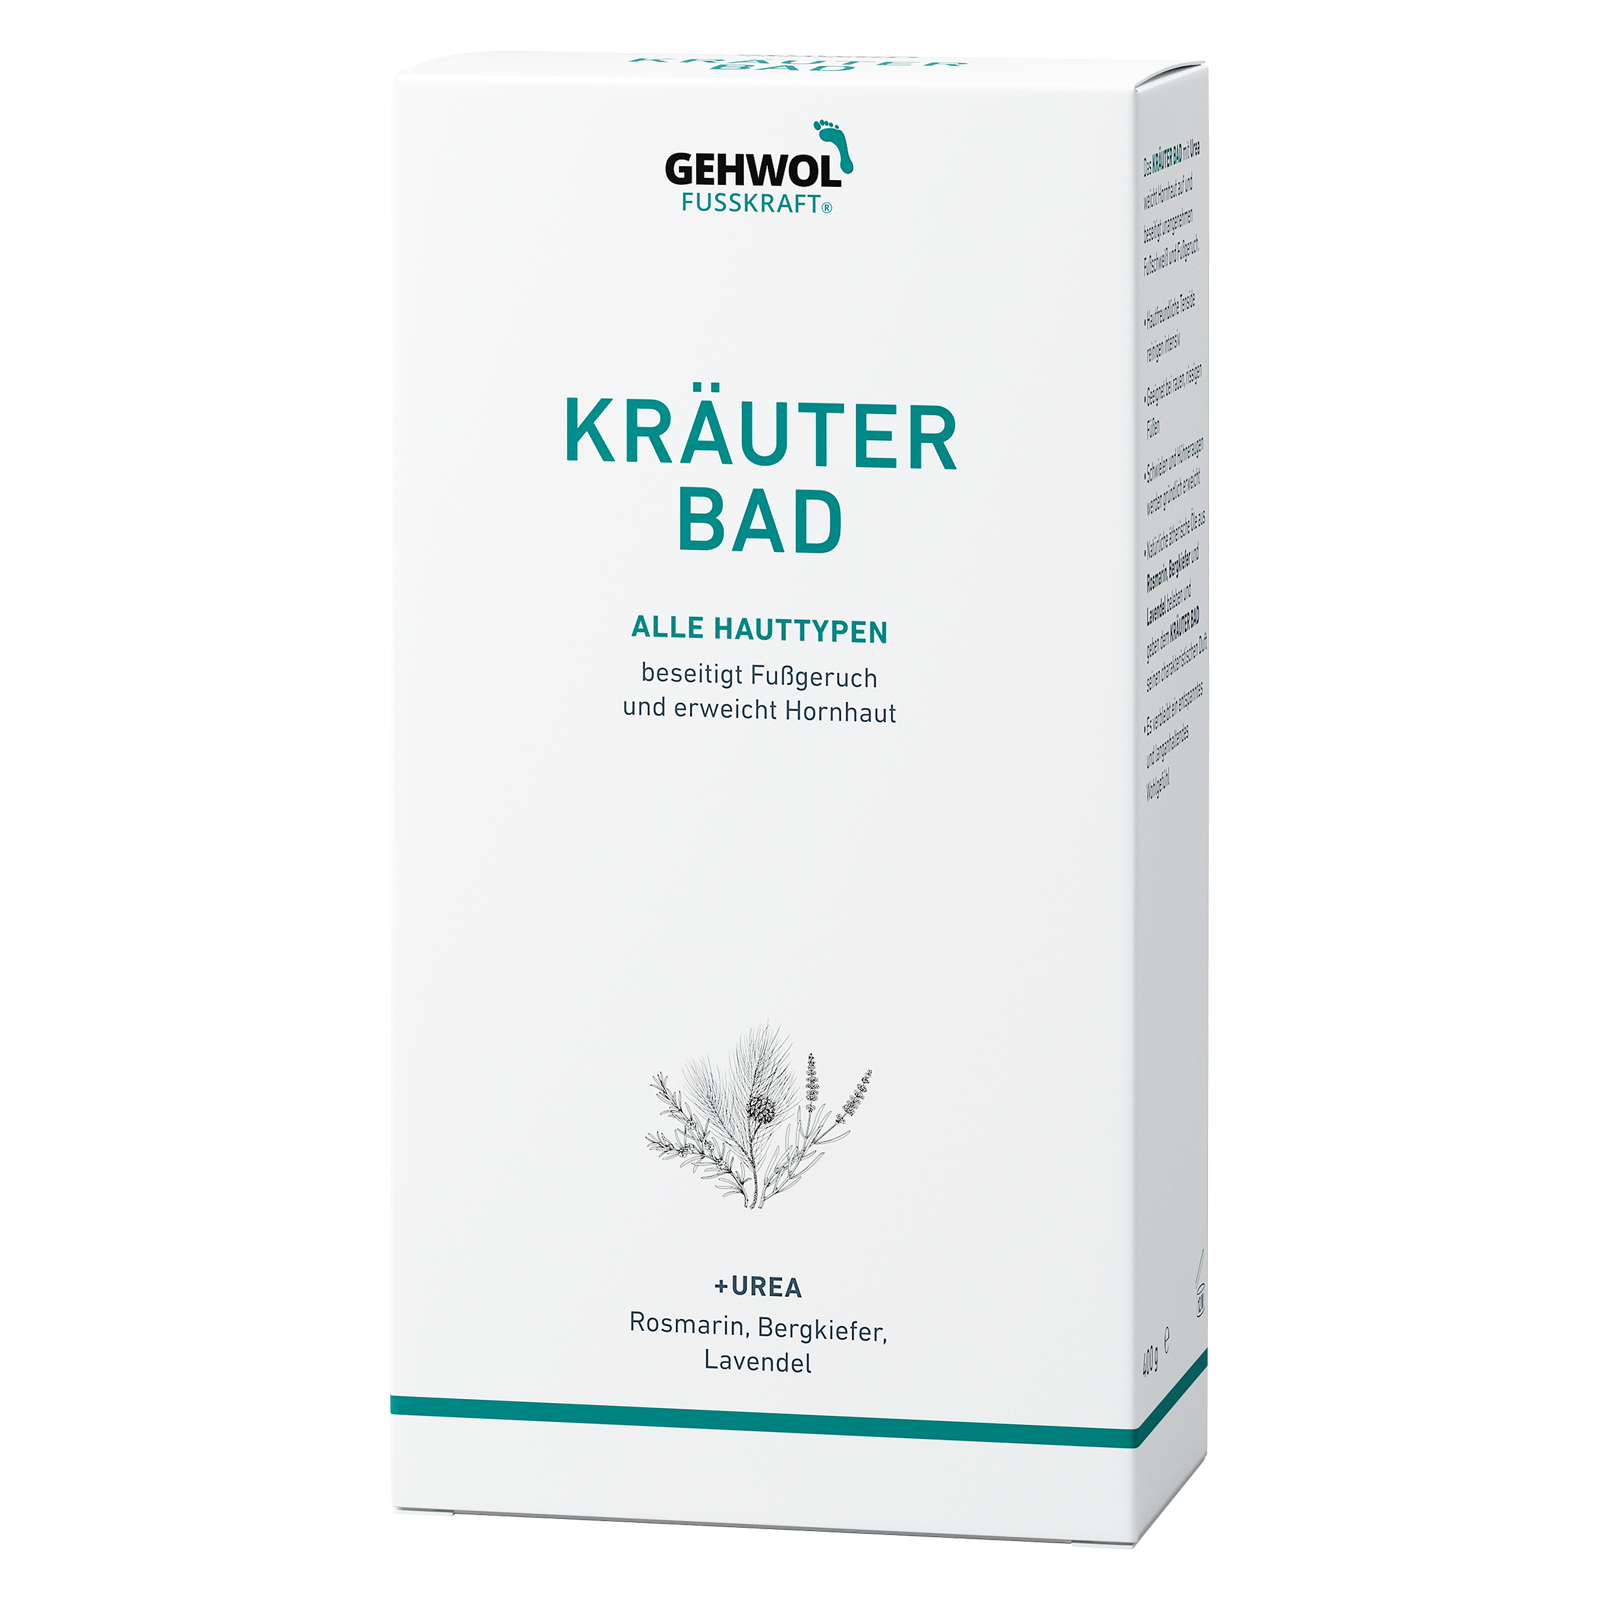 GEHWOL FUSSKRAFT® Kräuter Bad (Farbe Grün), 400 g Rechtsansicht